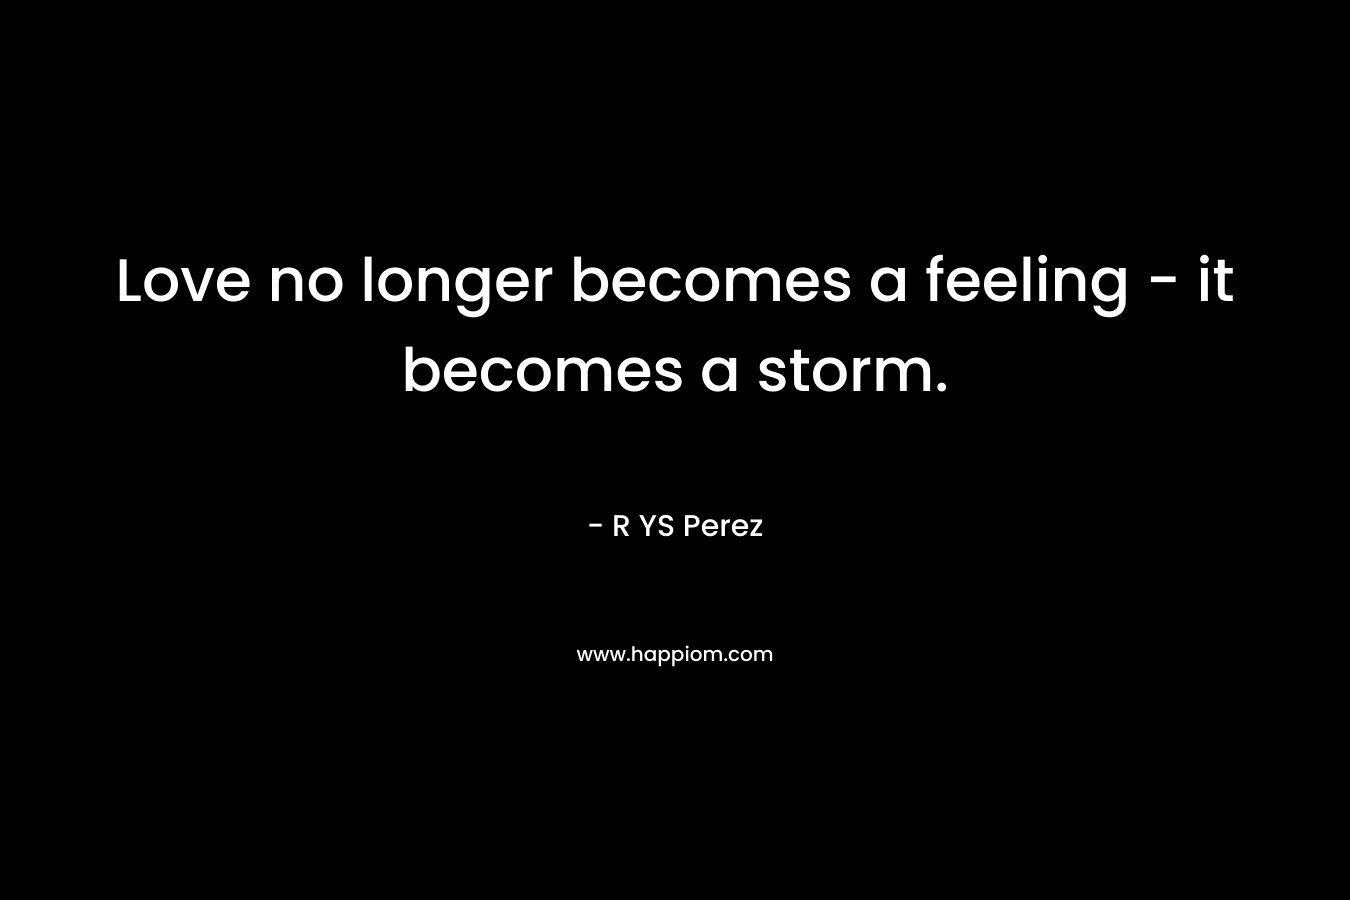 Love no longer becomes a feeling - it becomes a storm.